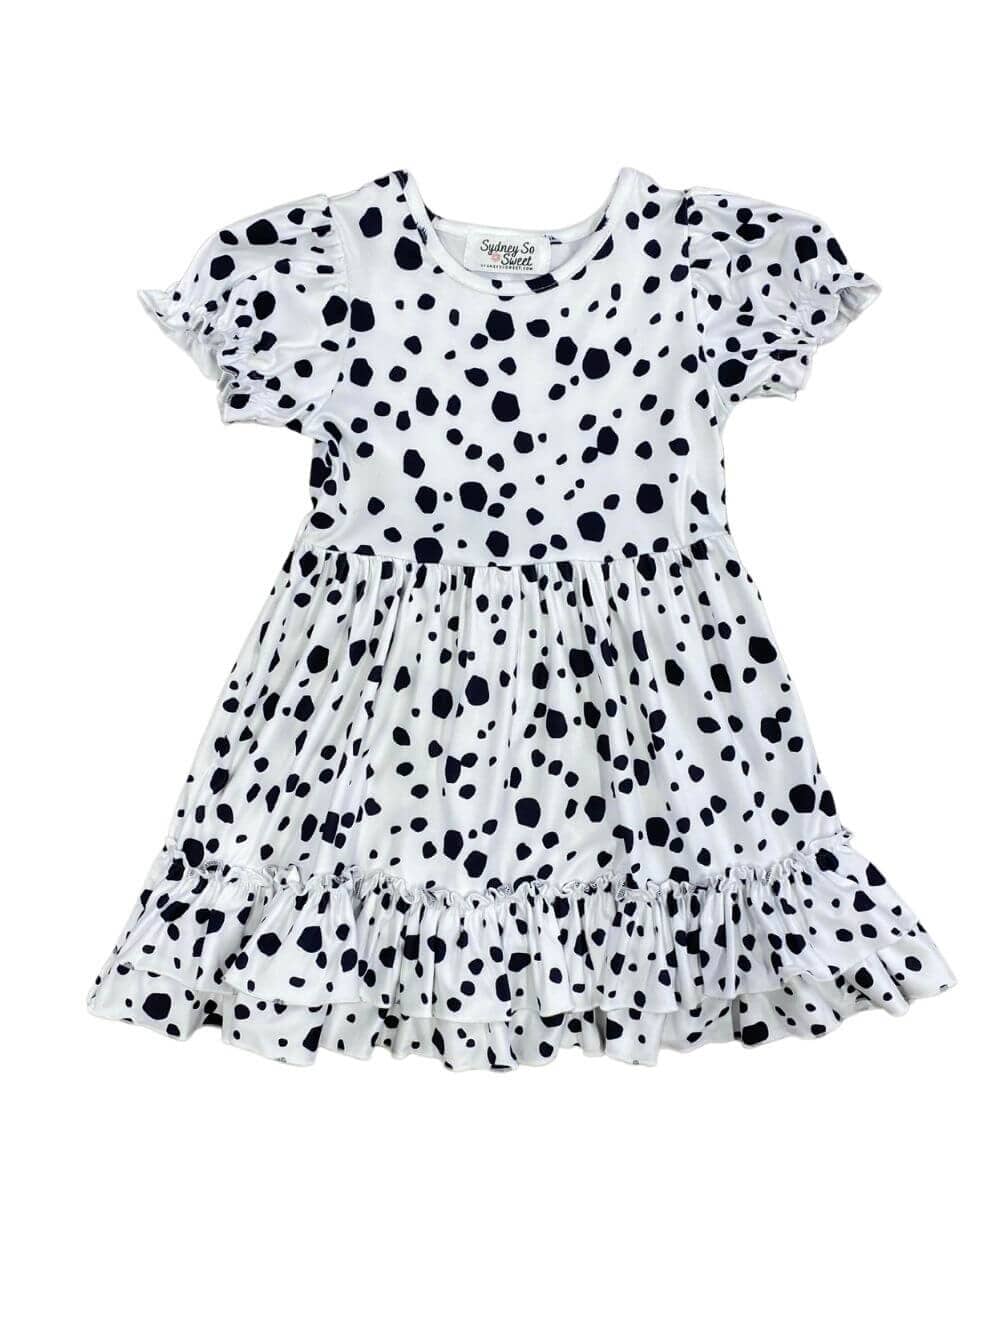 Puff Short Sleeve White & Black Girls Dalmatian Costume Dress